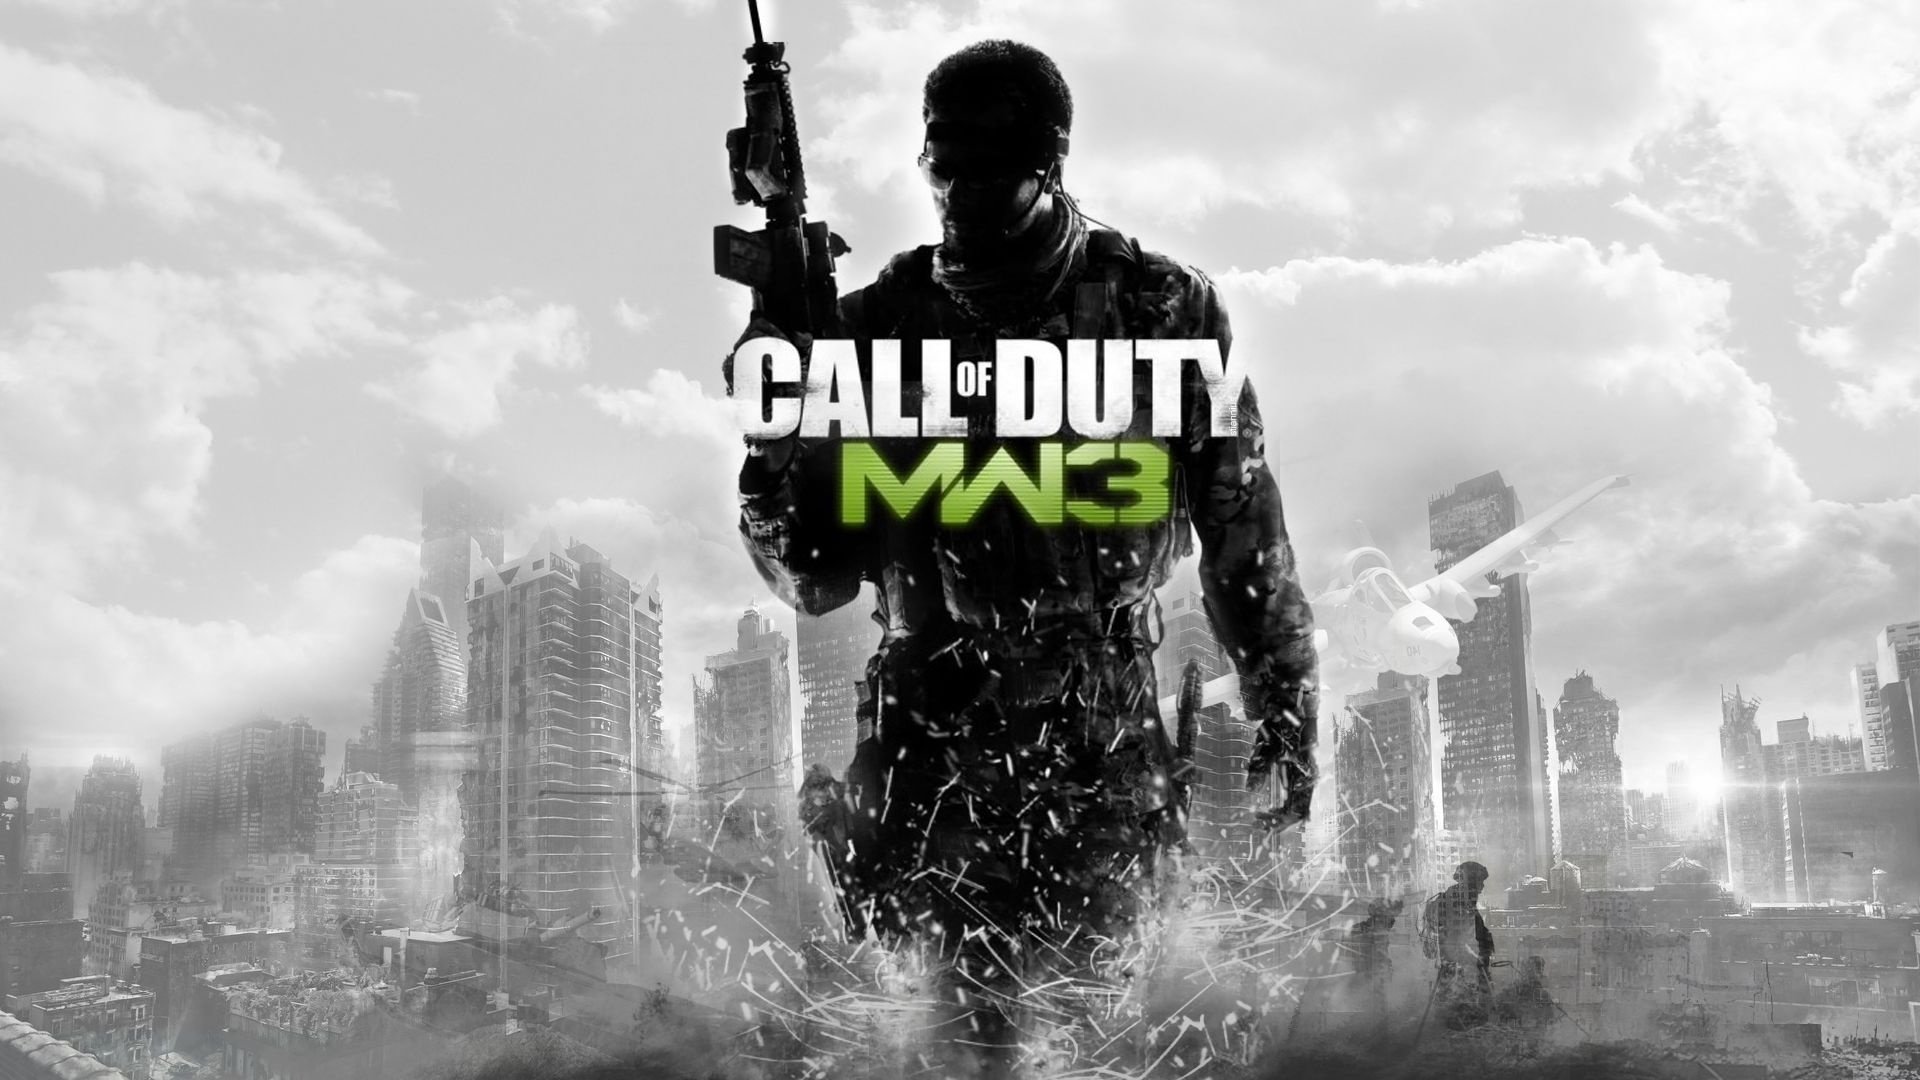 Best Call Of Duty: Modern Warfare 3 (MW3) wallpaper ID:378483 for High Resolution full hd 1920x1080 PC